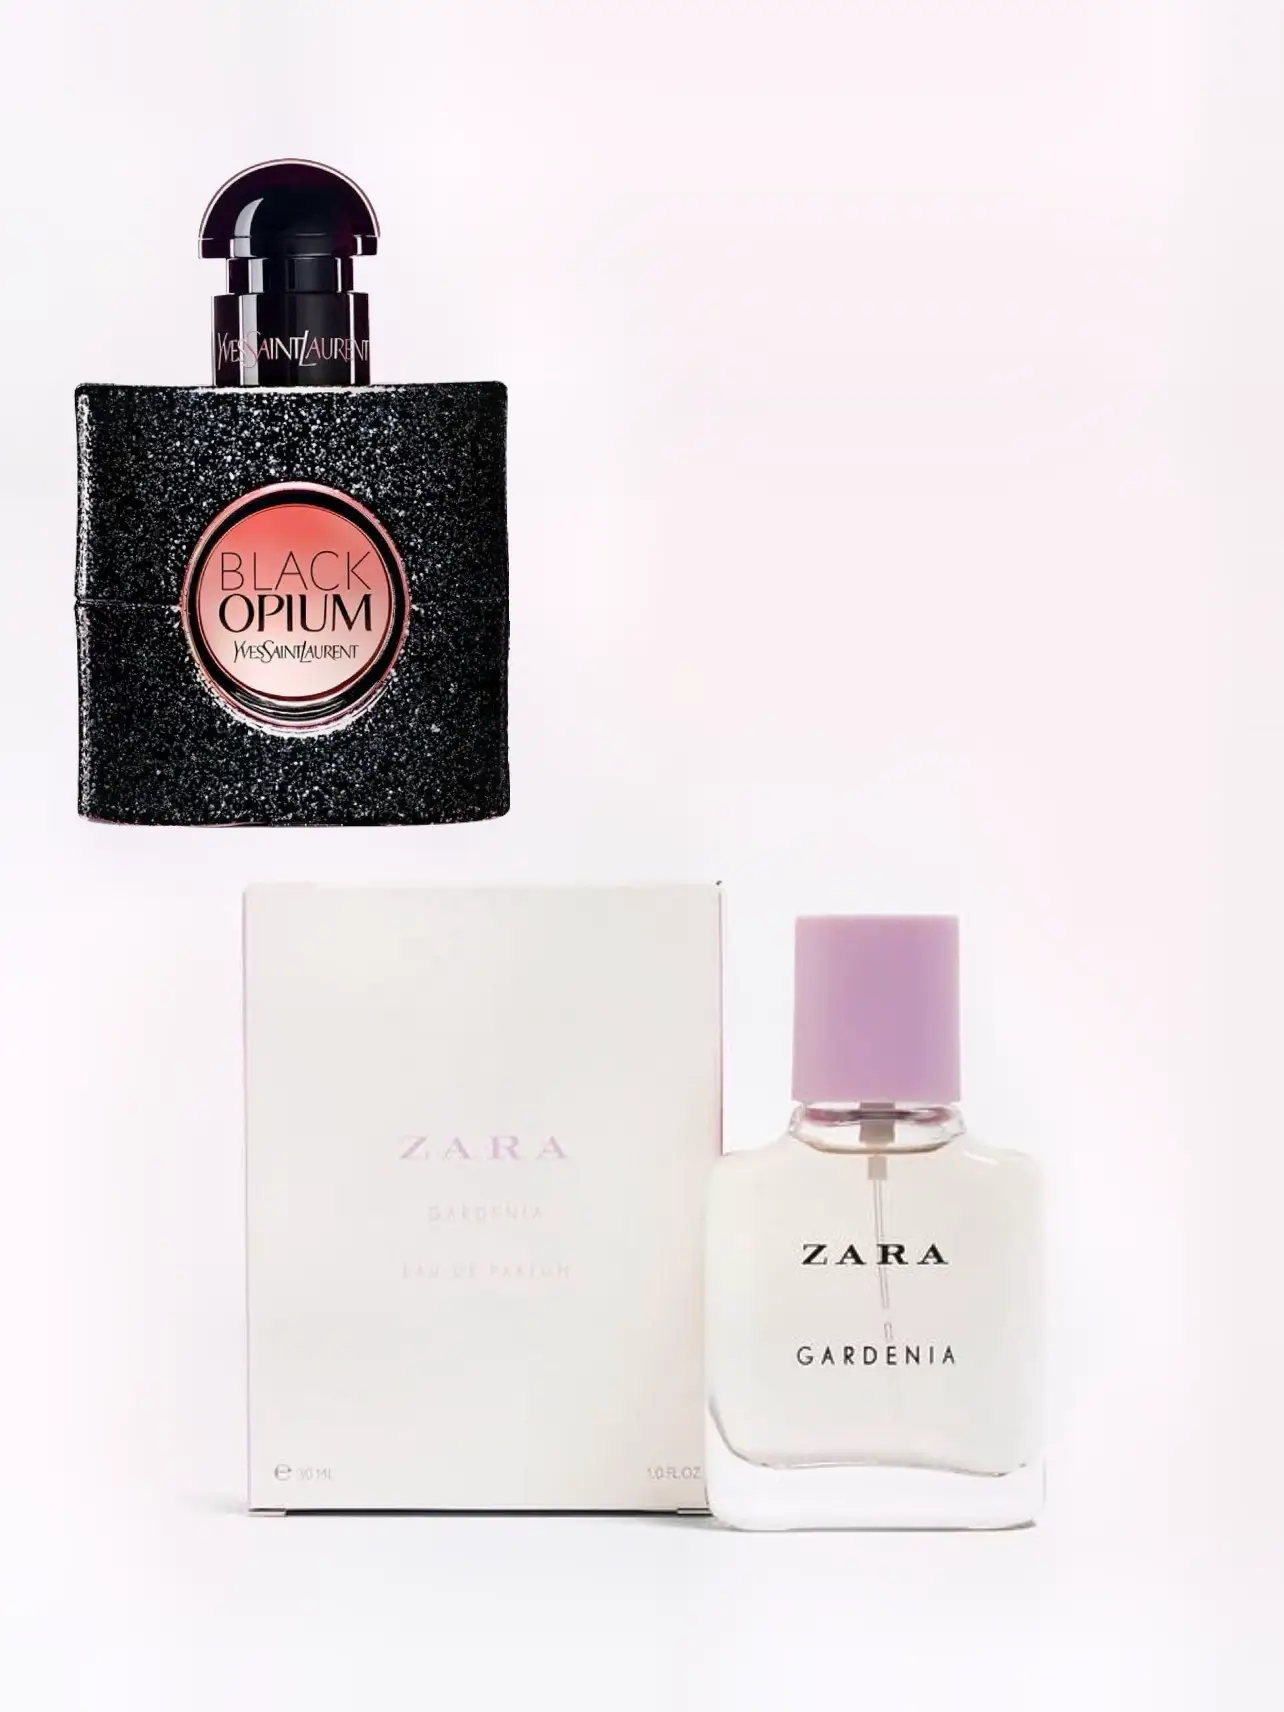 YSL Black Opium vs Zara Gardenia, Review and Comparison